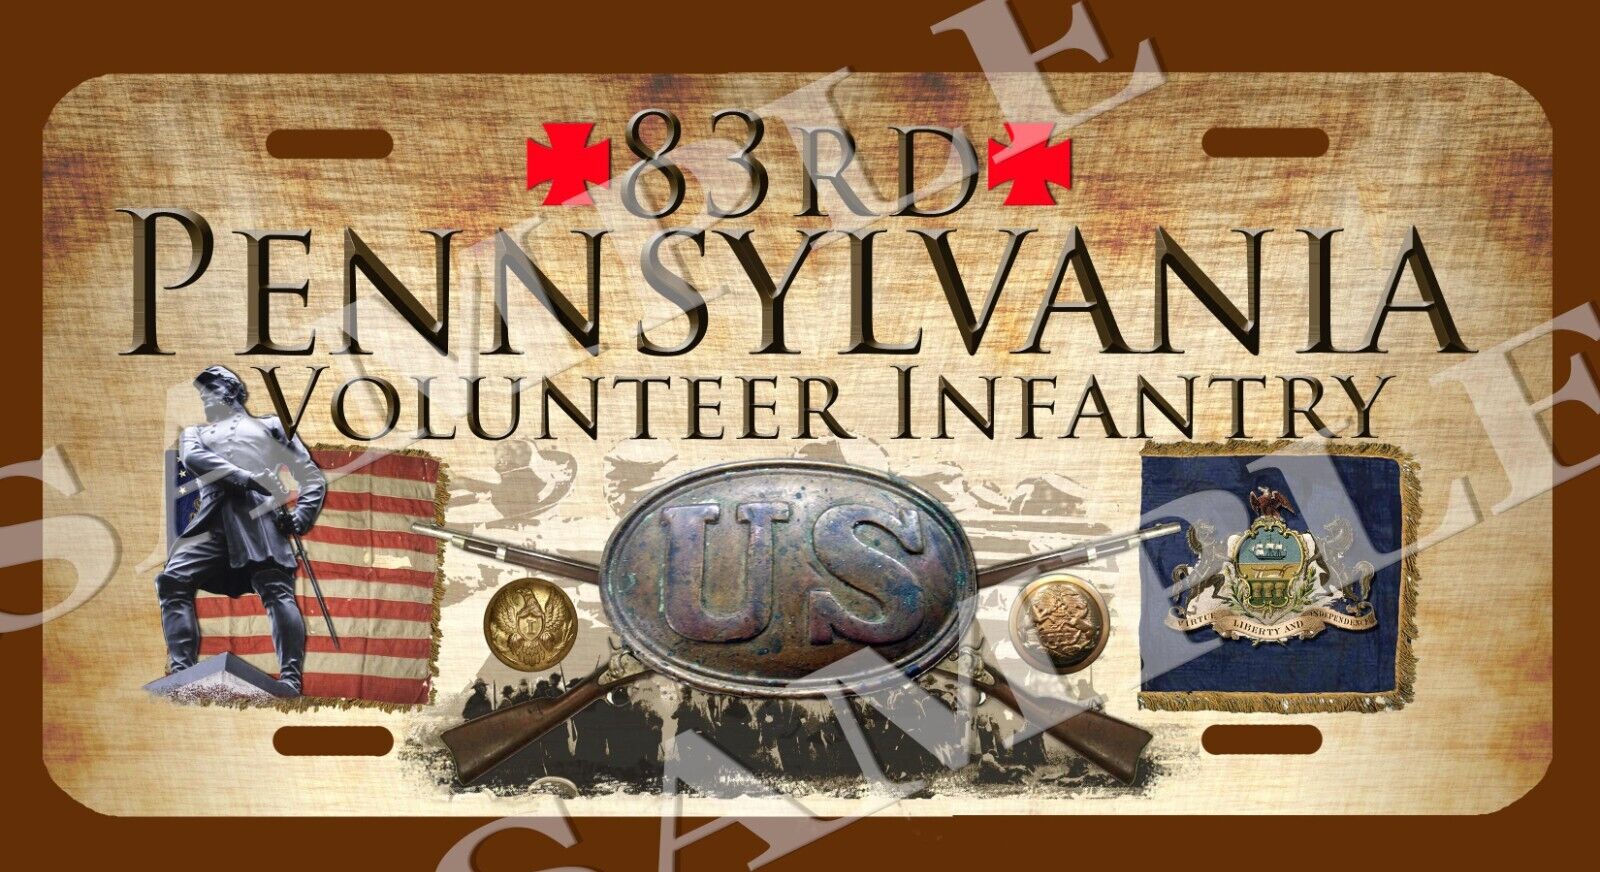 83rd Pennsylvania Infantry American Civil War Themed vehicle license plate